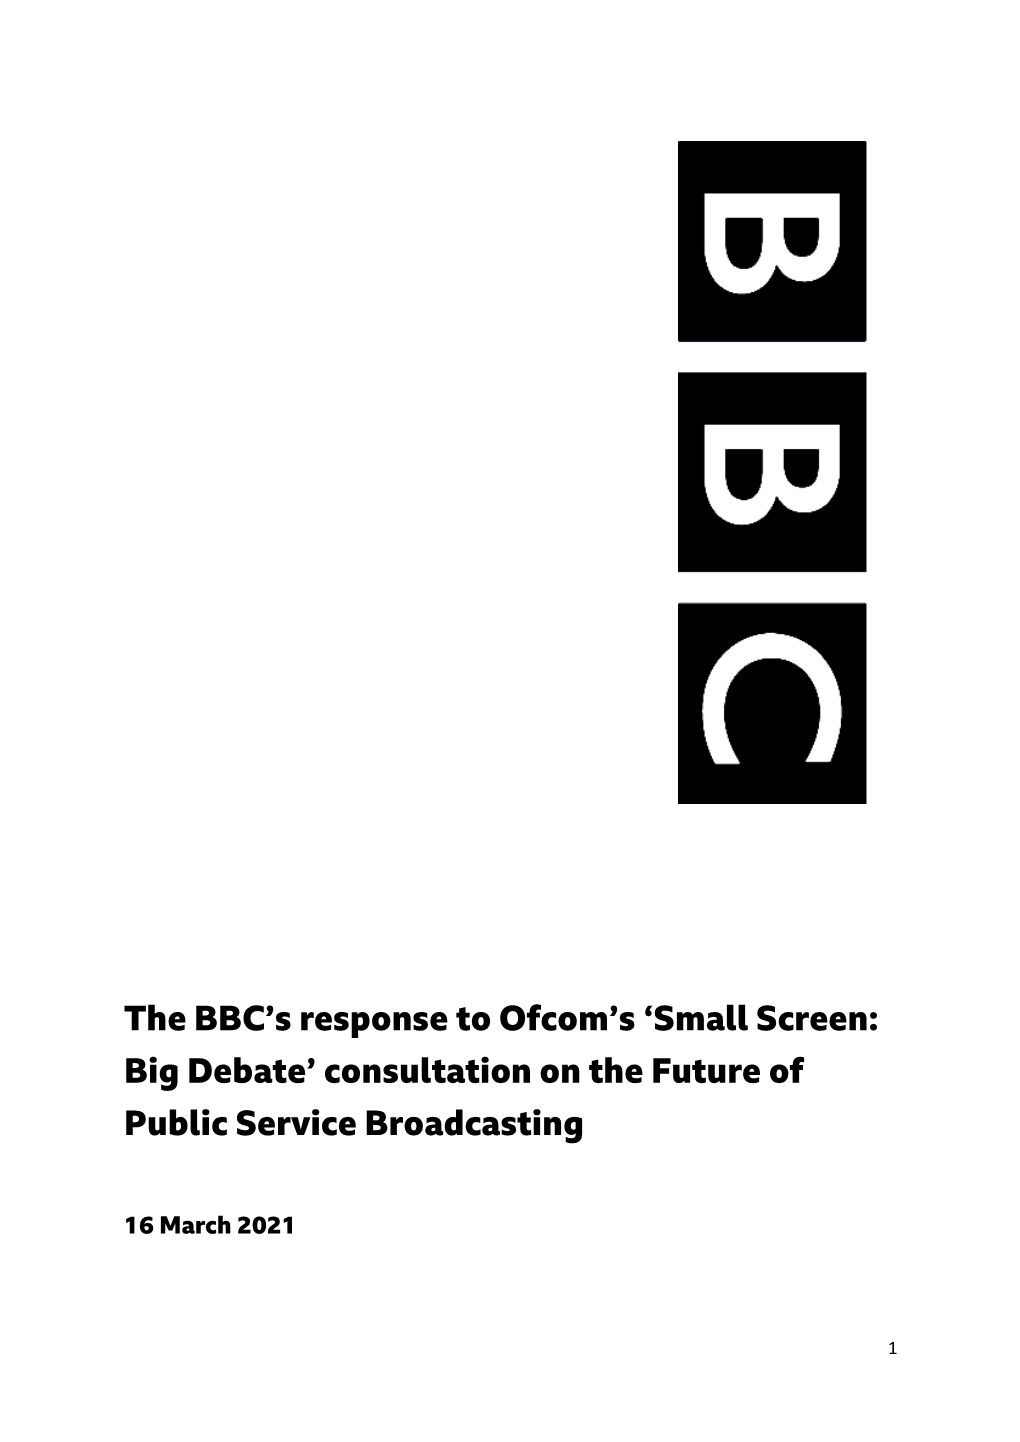 BBC’S Response to Ofcom’S ‘Small Screen: Big Debate’ Consultation on the Future of Public Service Broadcasting